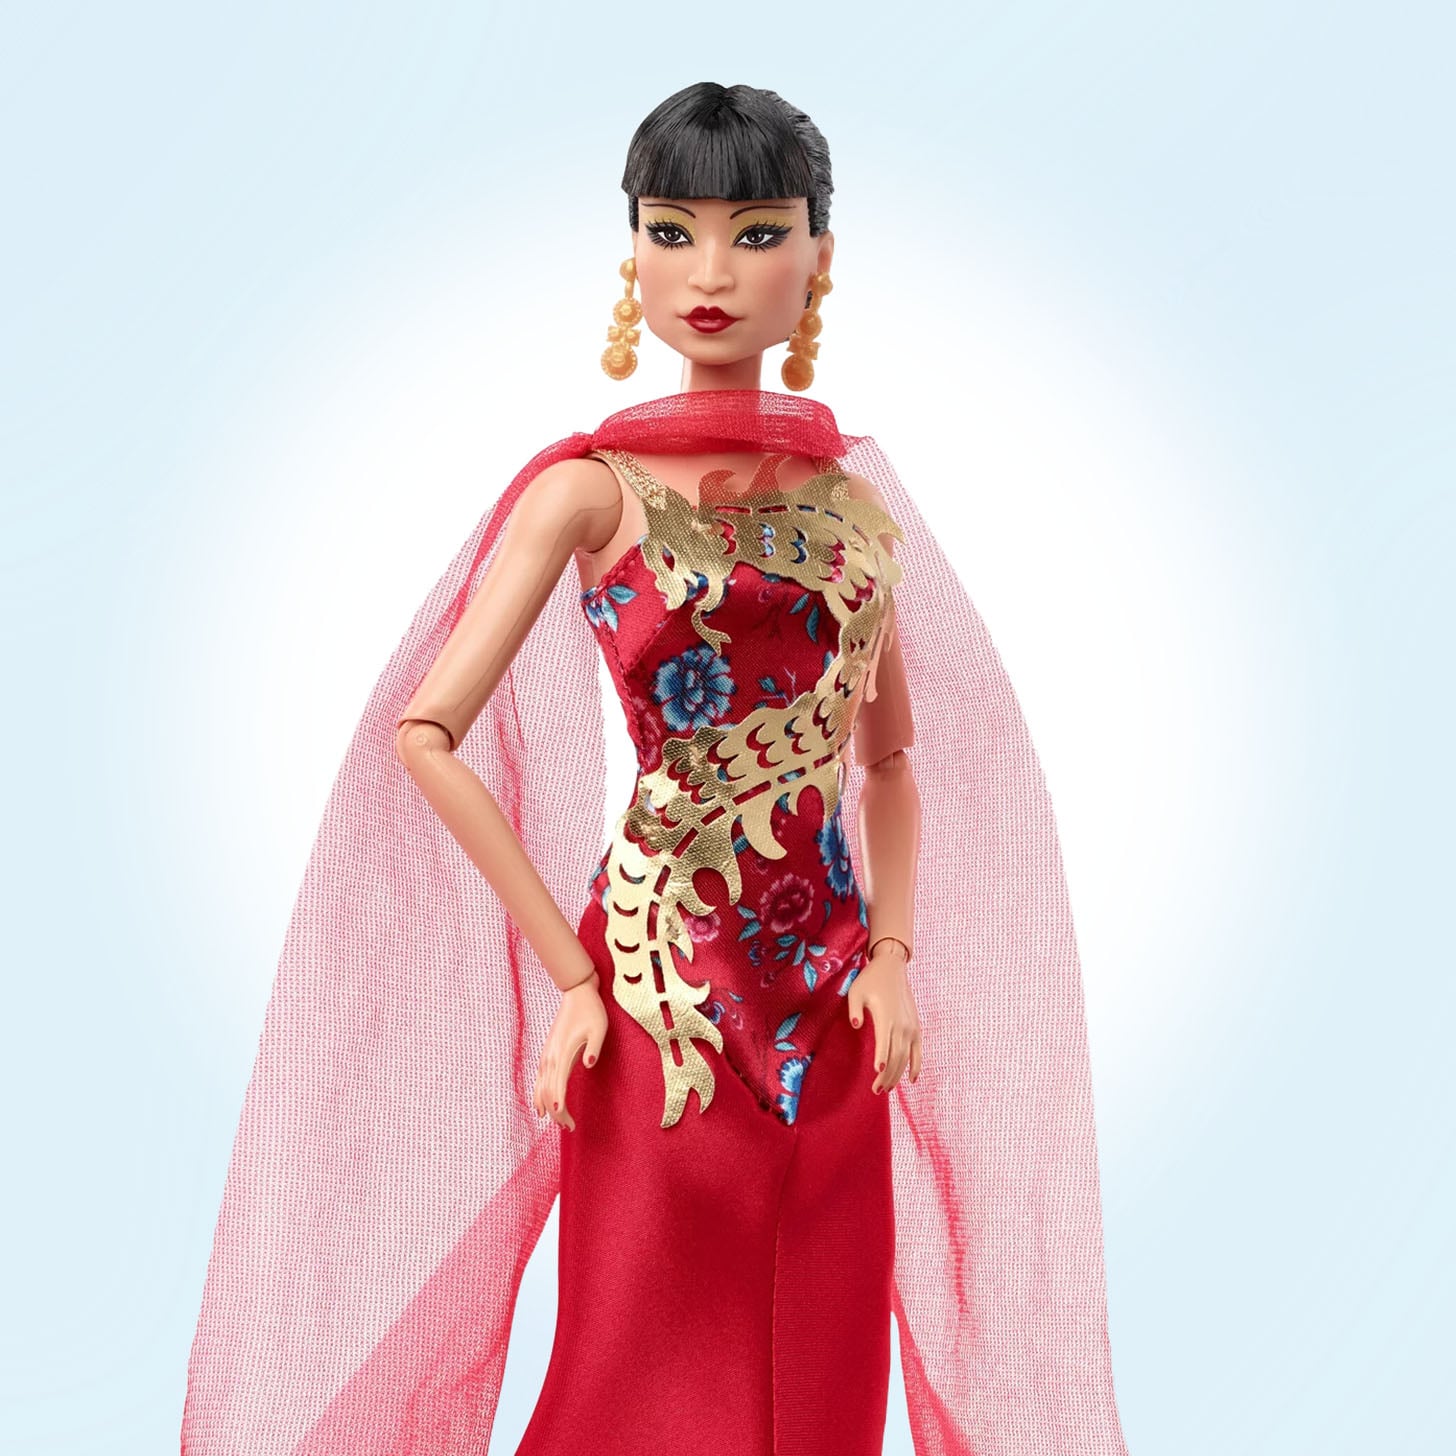 Anna May Wong-Barbie